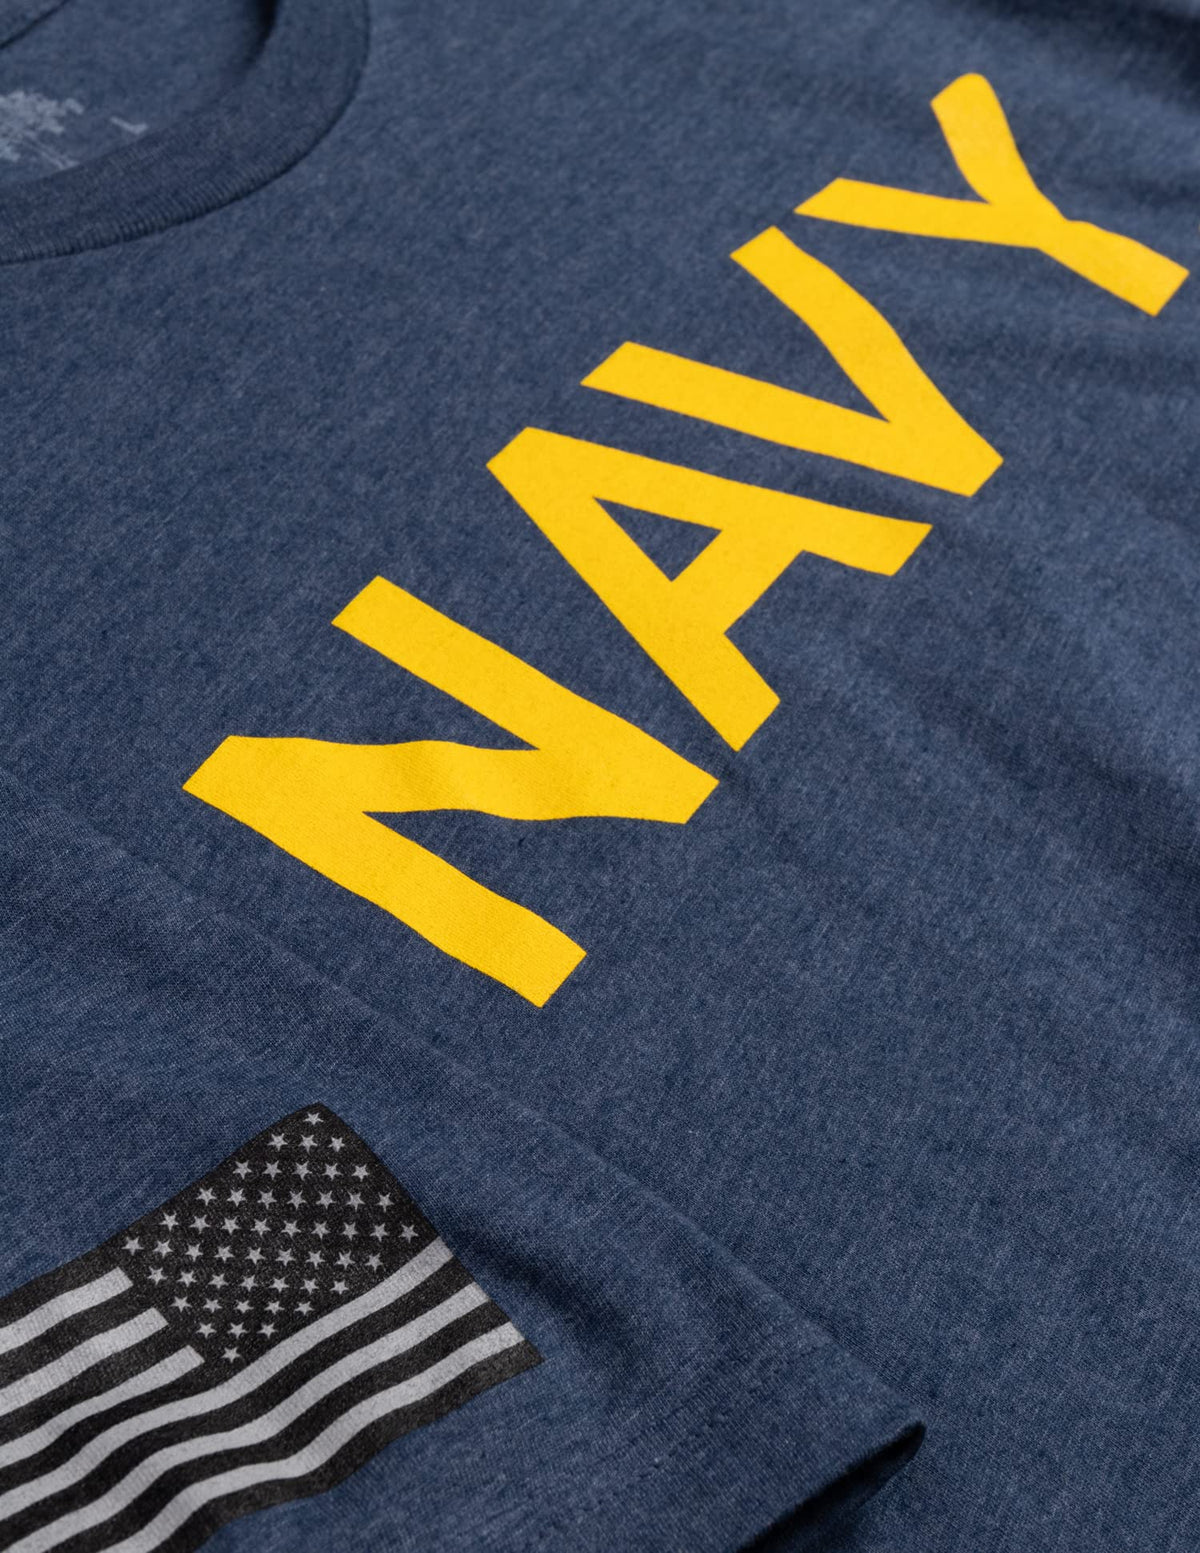 USS Mahan, DDG-72 | U.S. Navy Sailor Veteran USN United States Naval T-shirt for Men Women